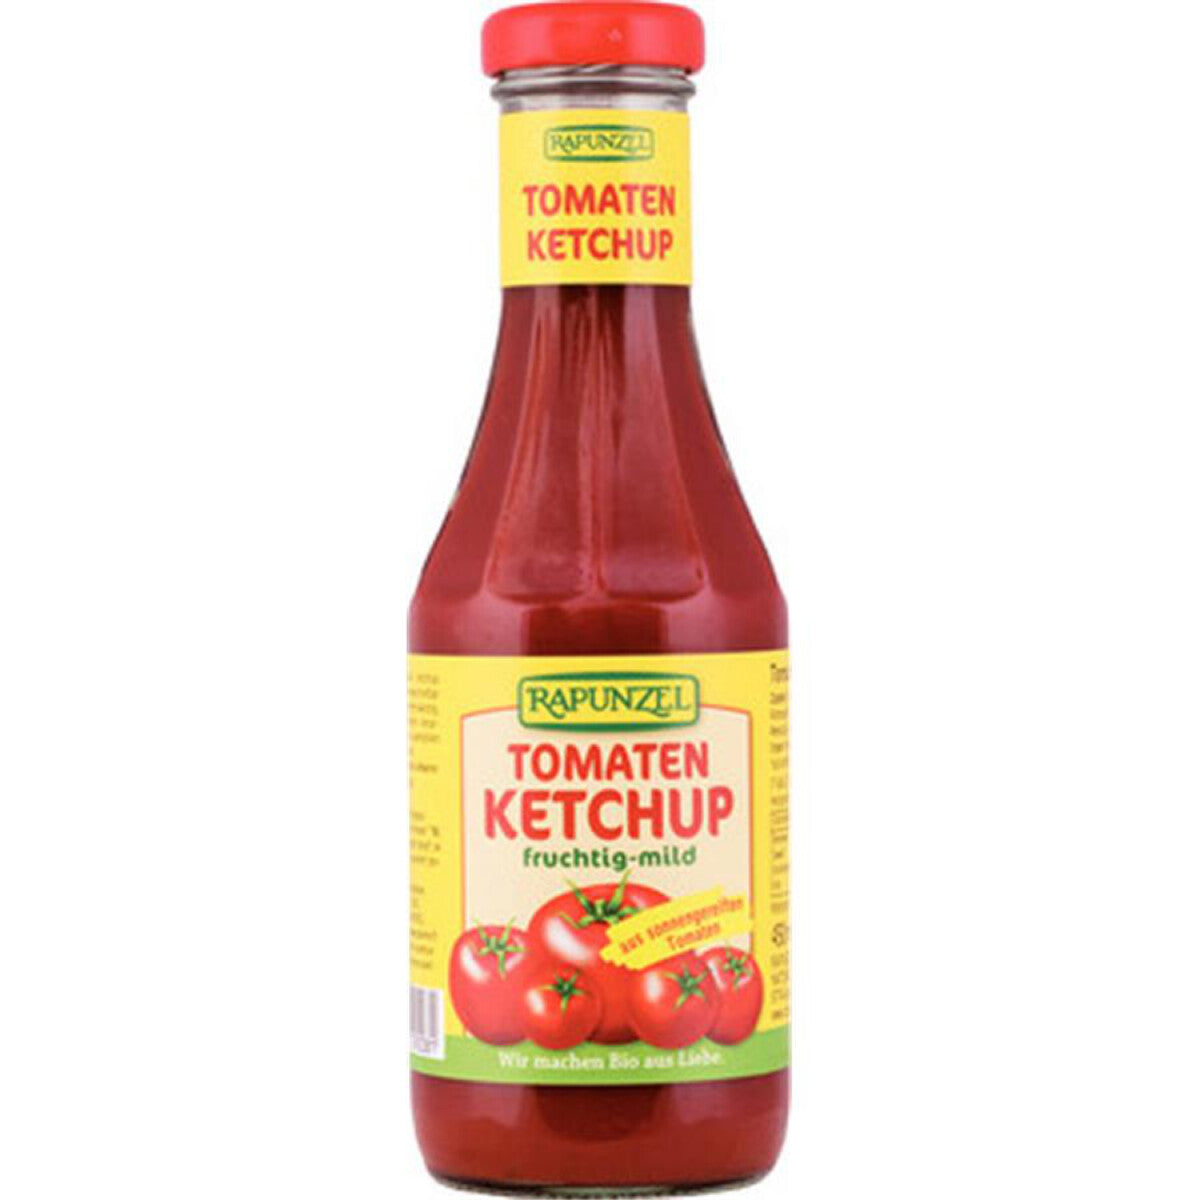 RAPUNZEL Tomaten Ketchup - 450 ml 